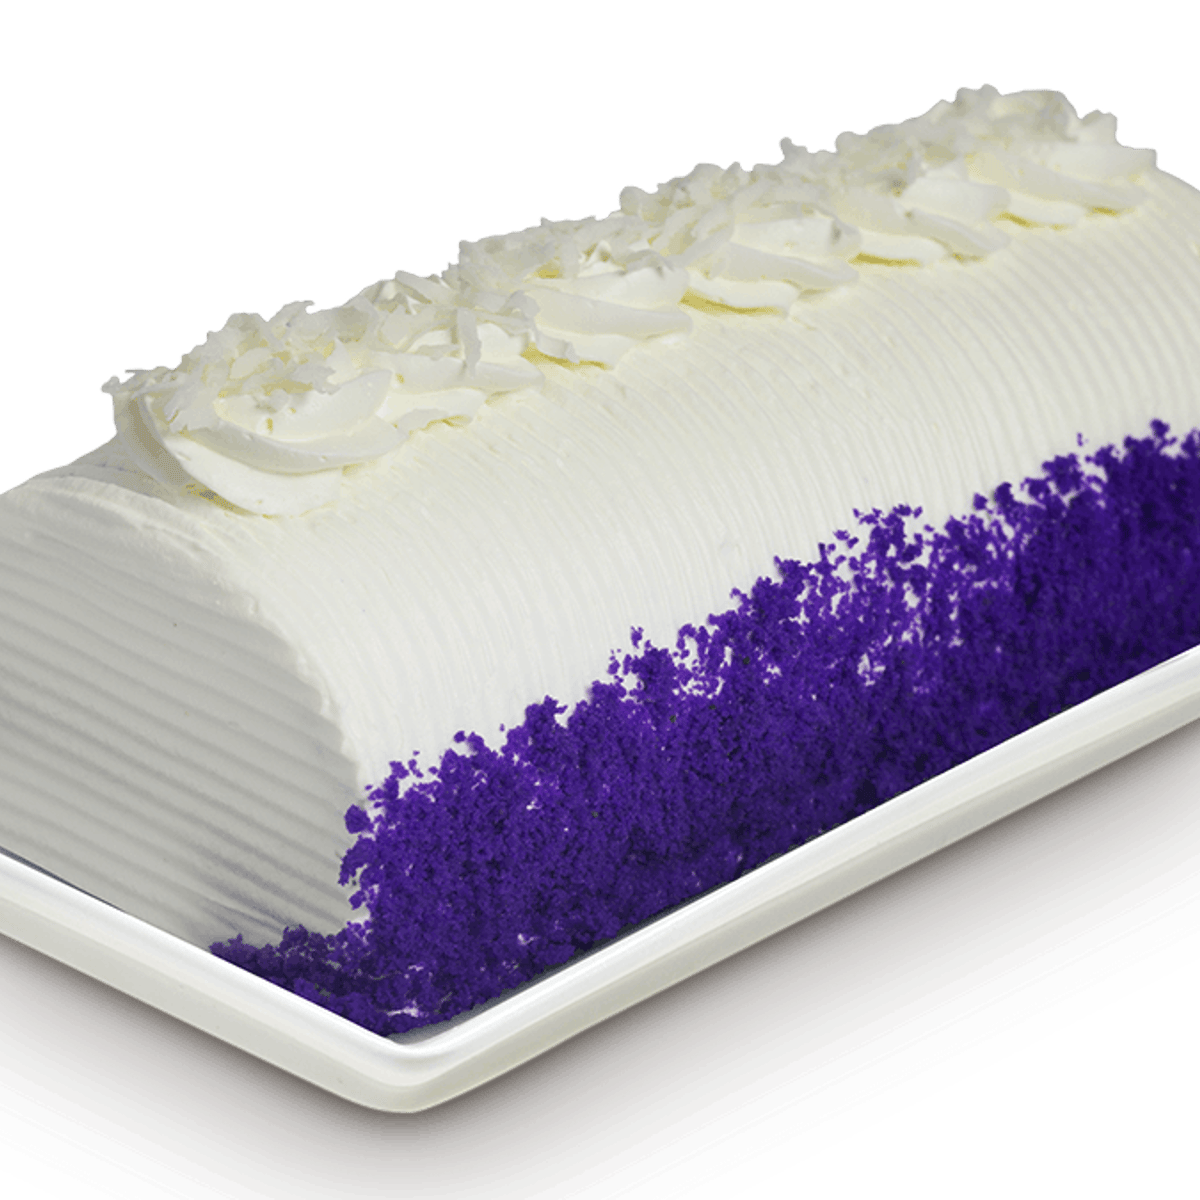 Red Ribbon Cake 2023; Dedication Rolls Pastries Empanadas Types